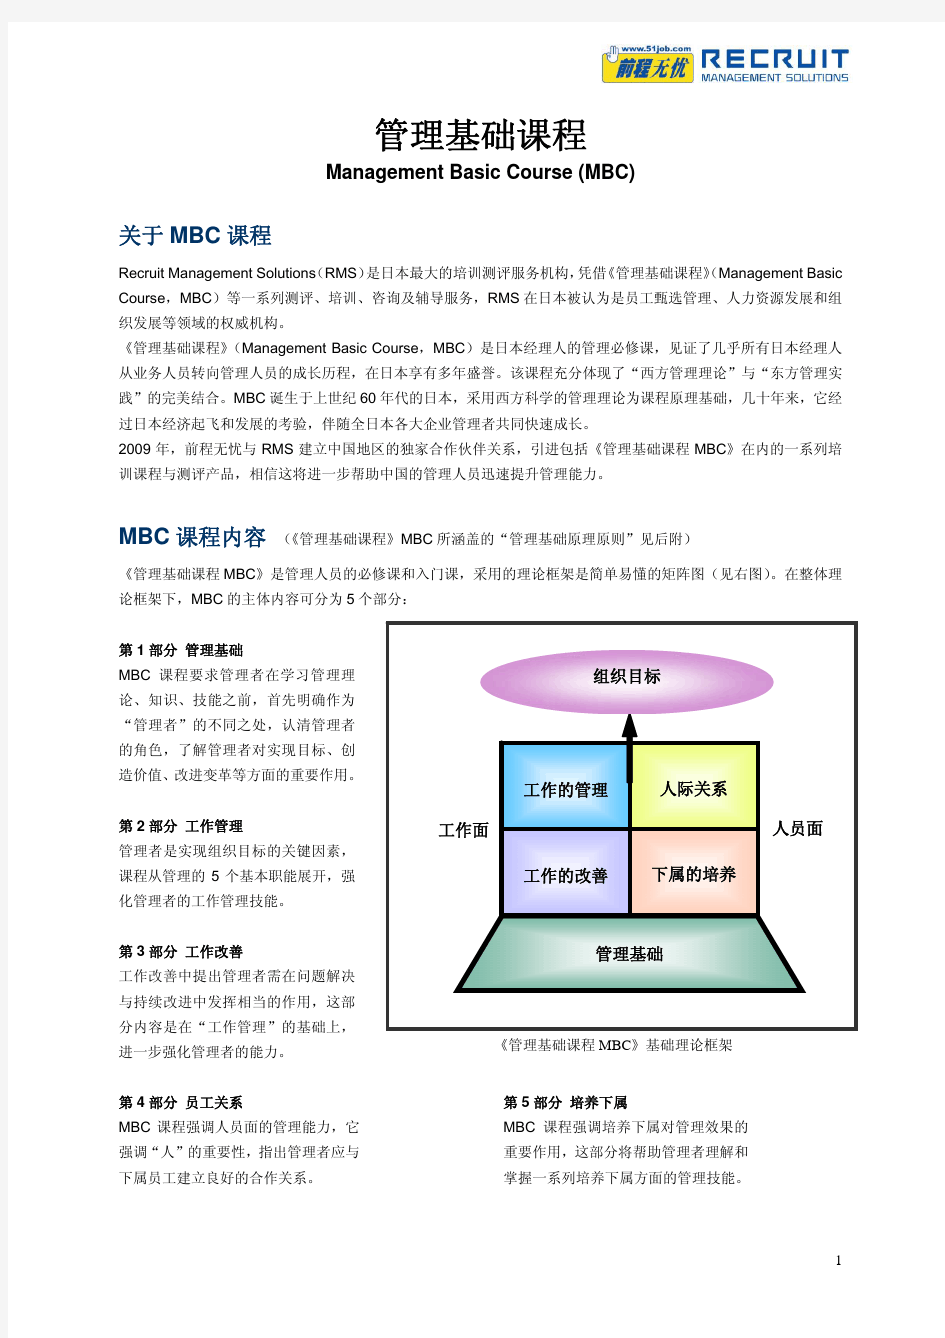 MBC 课程内容 (《管理基础课程》MBC所涵盖的管理基础原理原则 ...